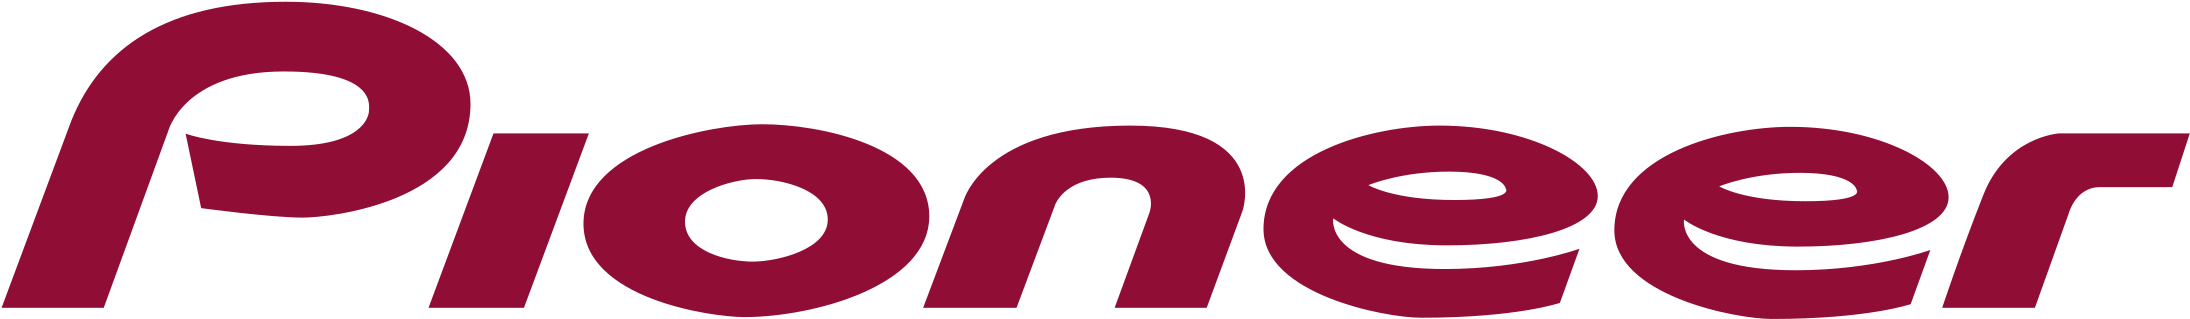 Pioneer Logo Png Transparent - Pioneer Logo (2400x2400)